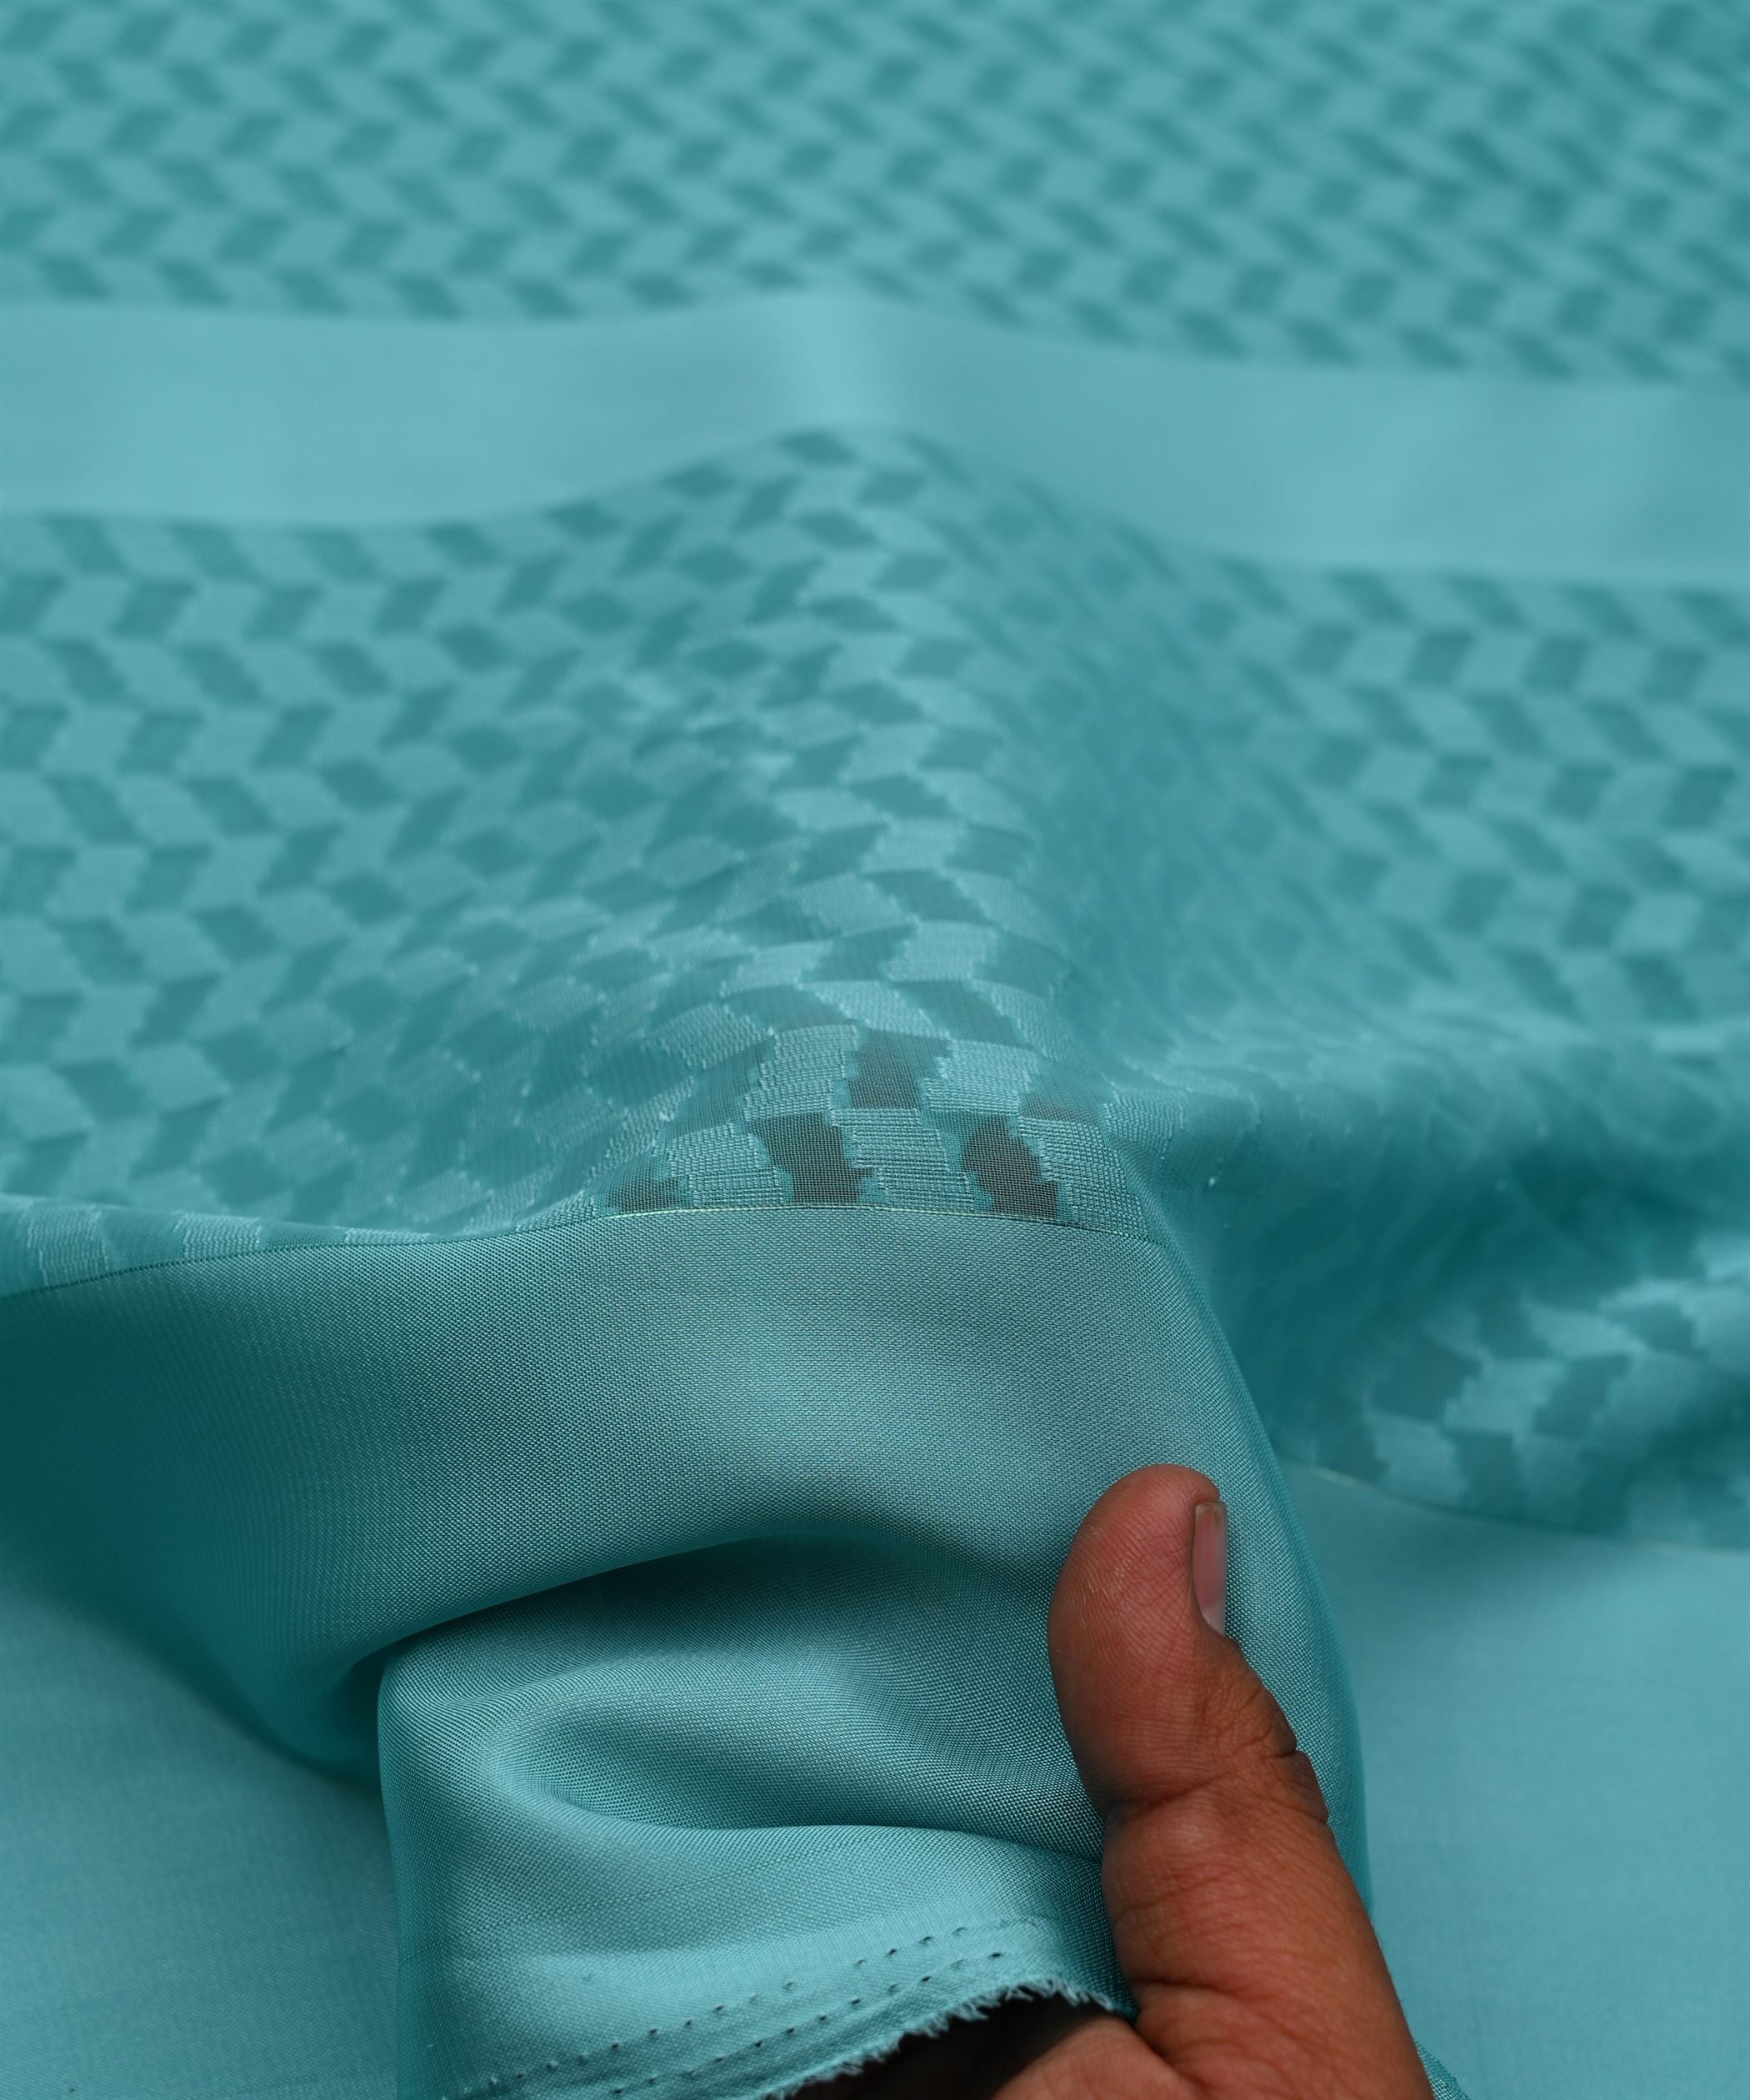 Aqua Blue Georgette Fabric with Satin Pattern